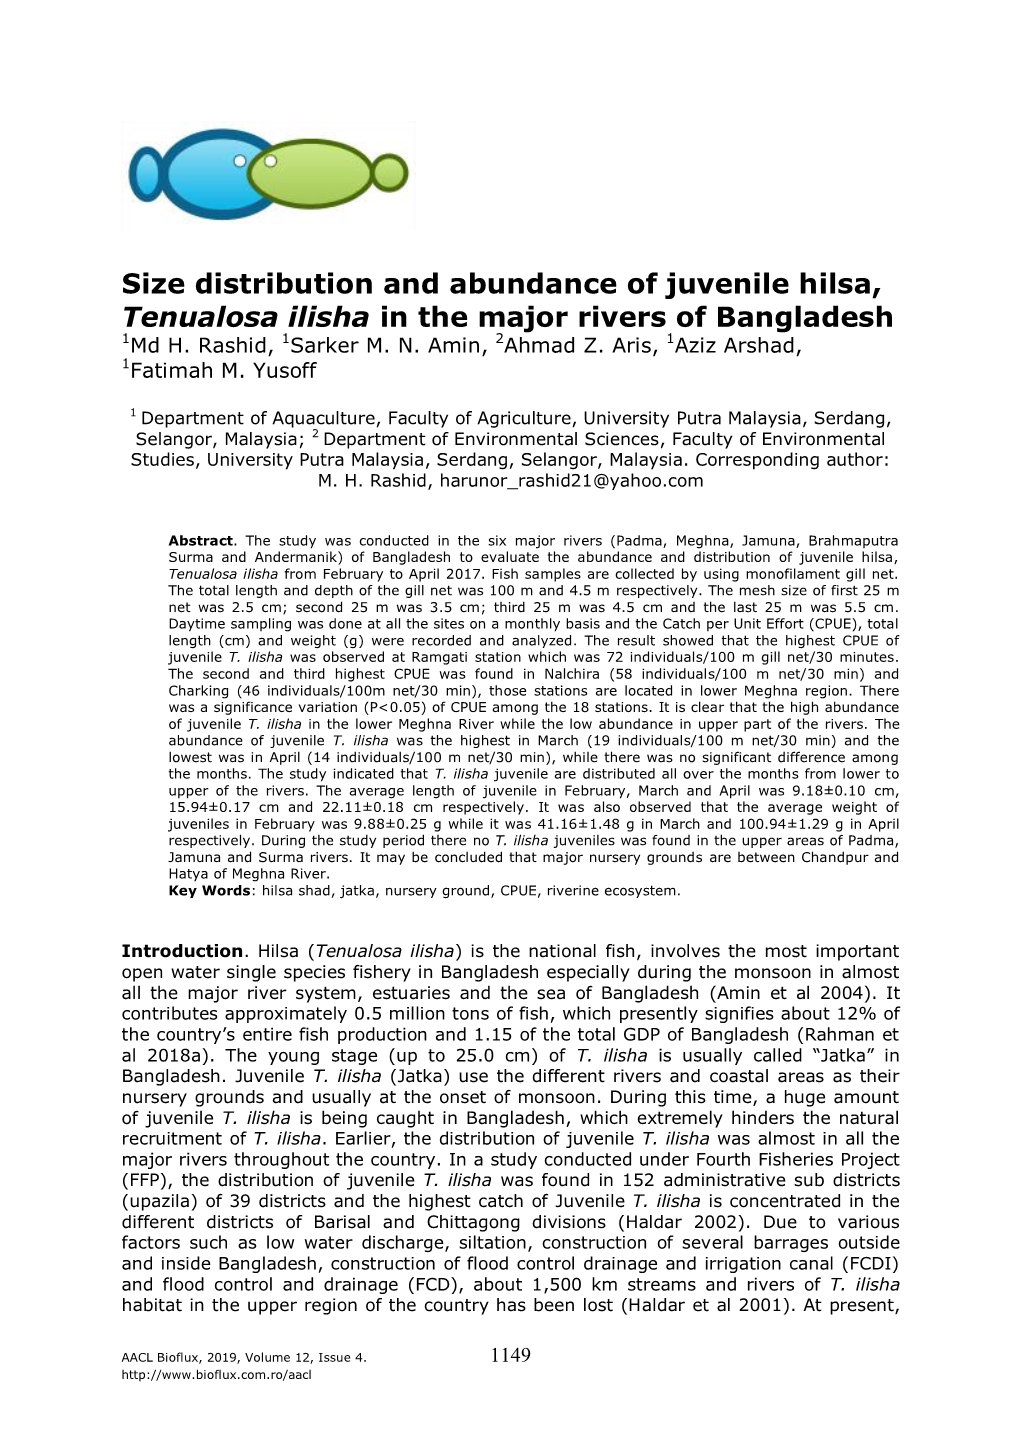 Size Distribution and Abundance of Juvenile Hilsa, Tenualosa Ilisha in the Major Rivers of Bangladesh 1Md H